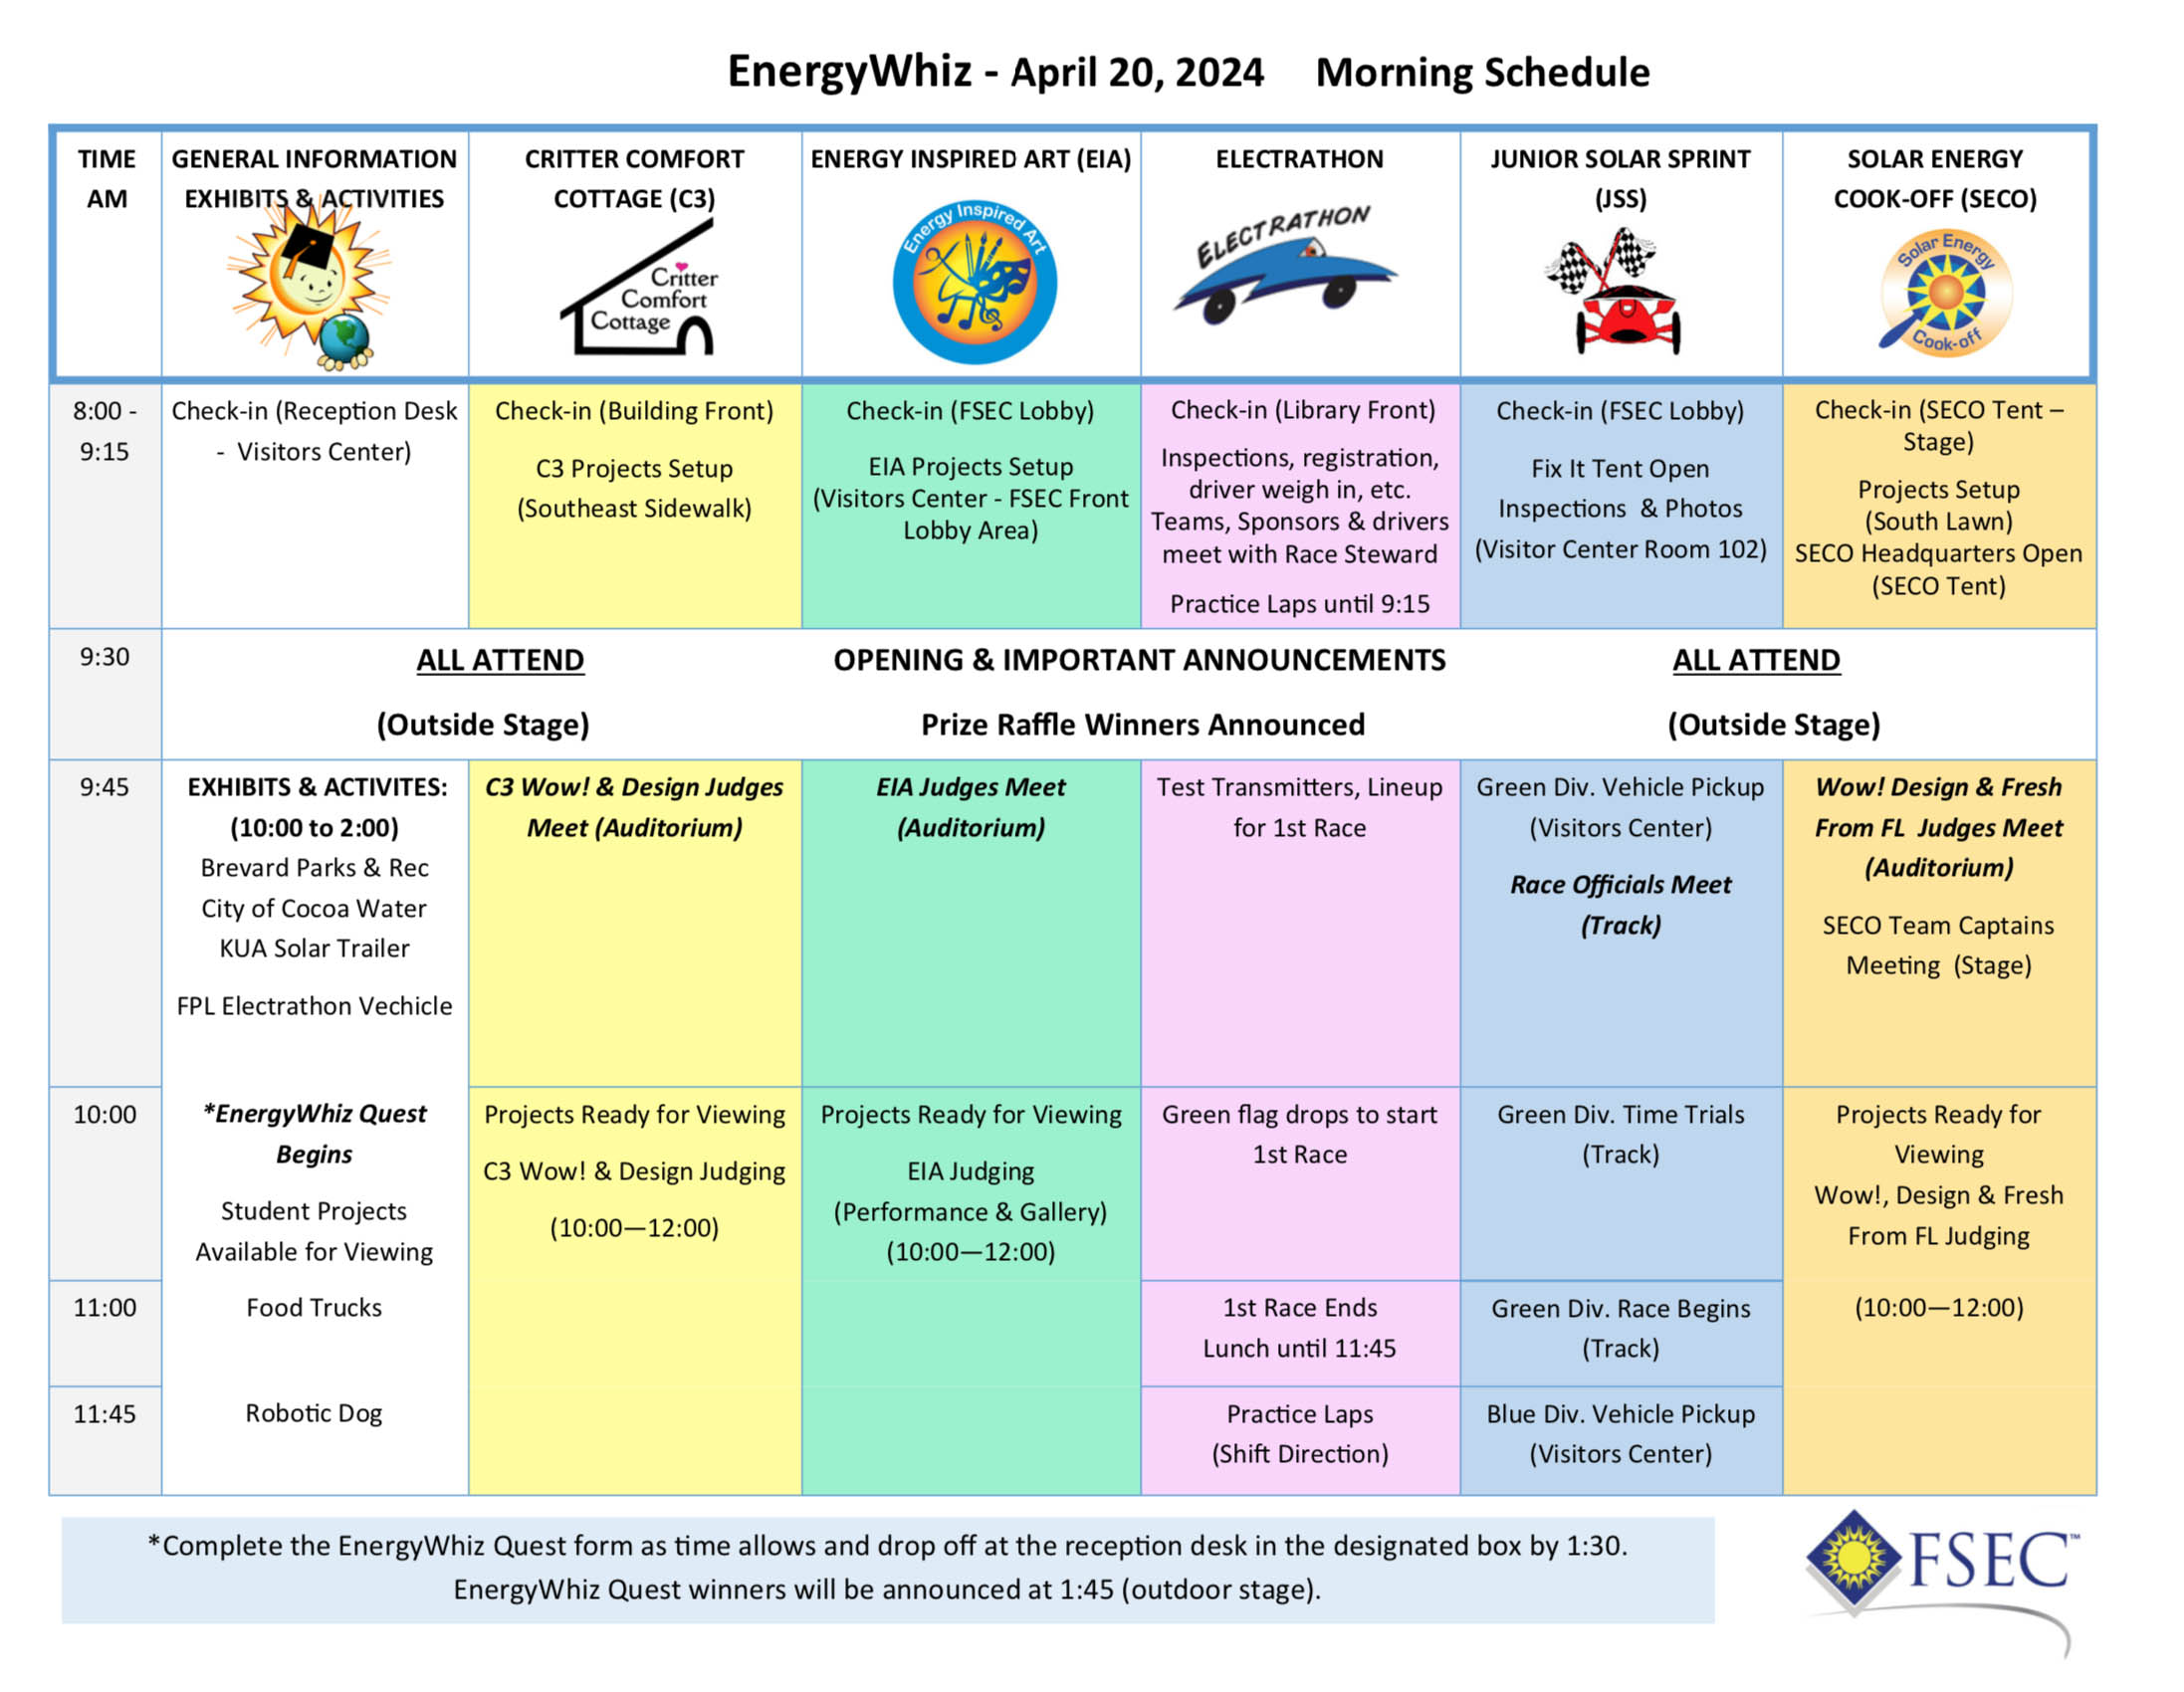 Morning Schedule, EnergyWhiz - April 20, 2024